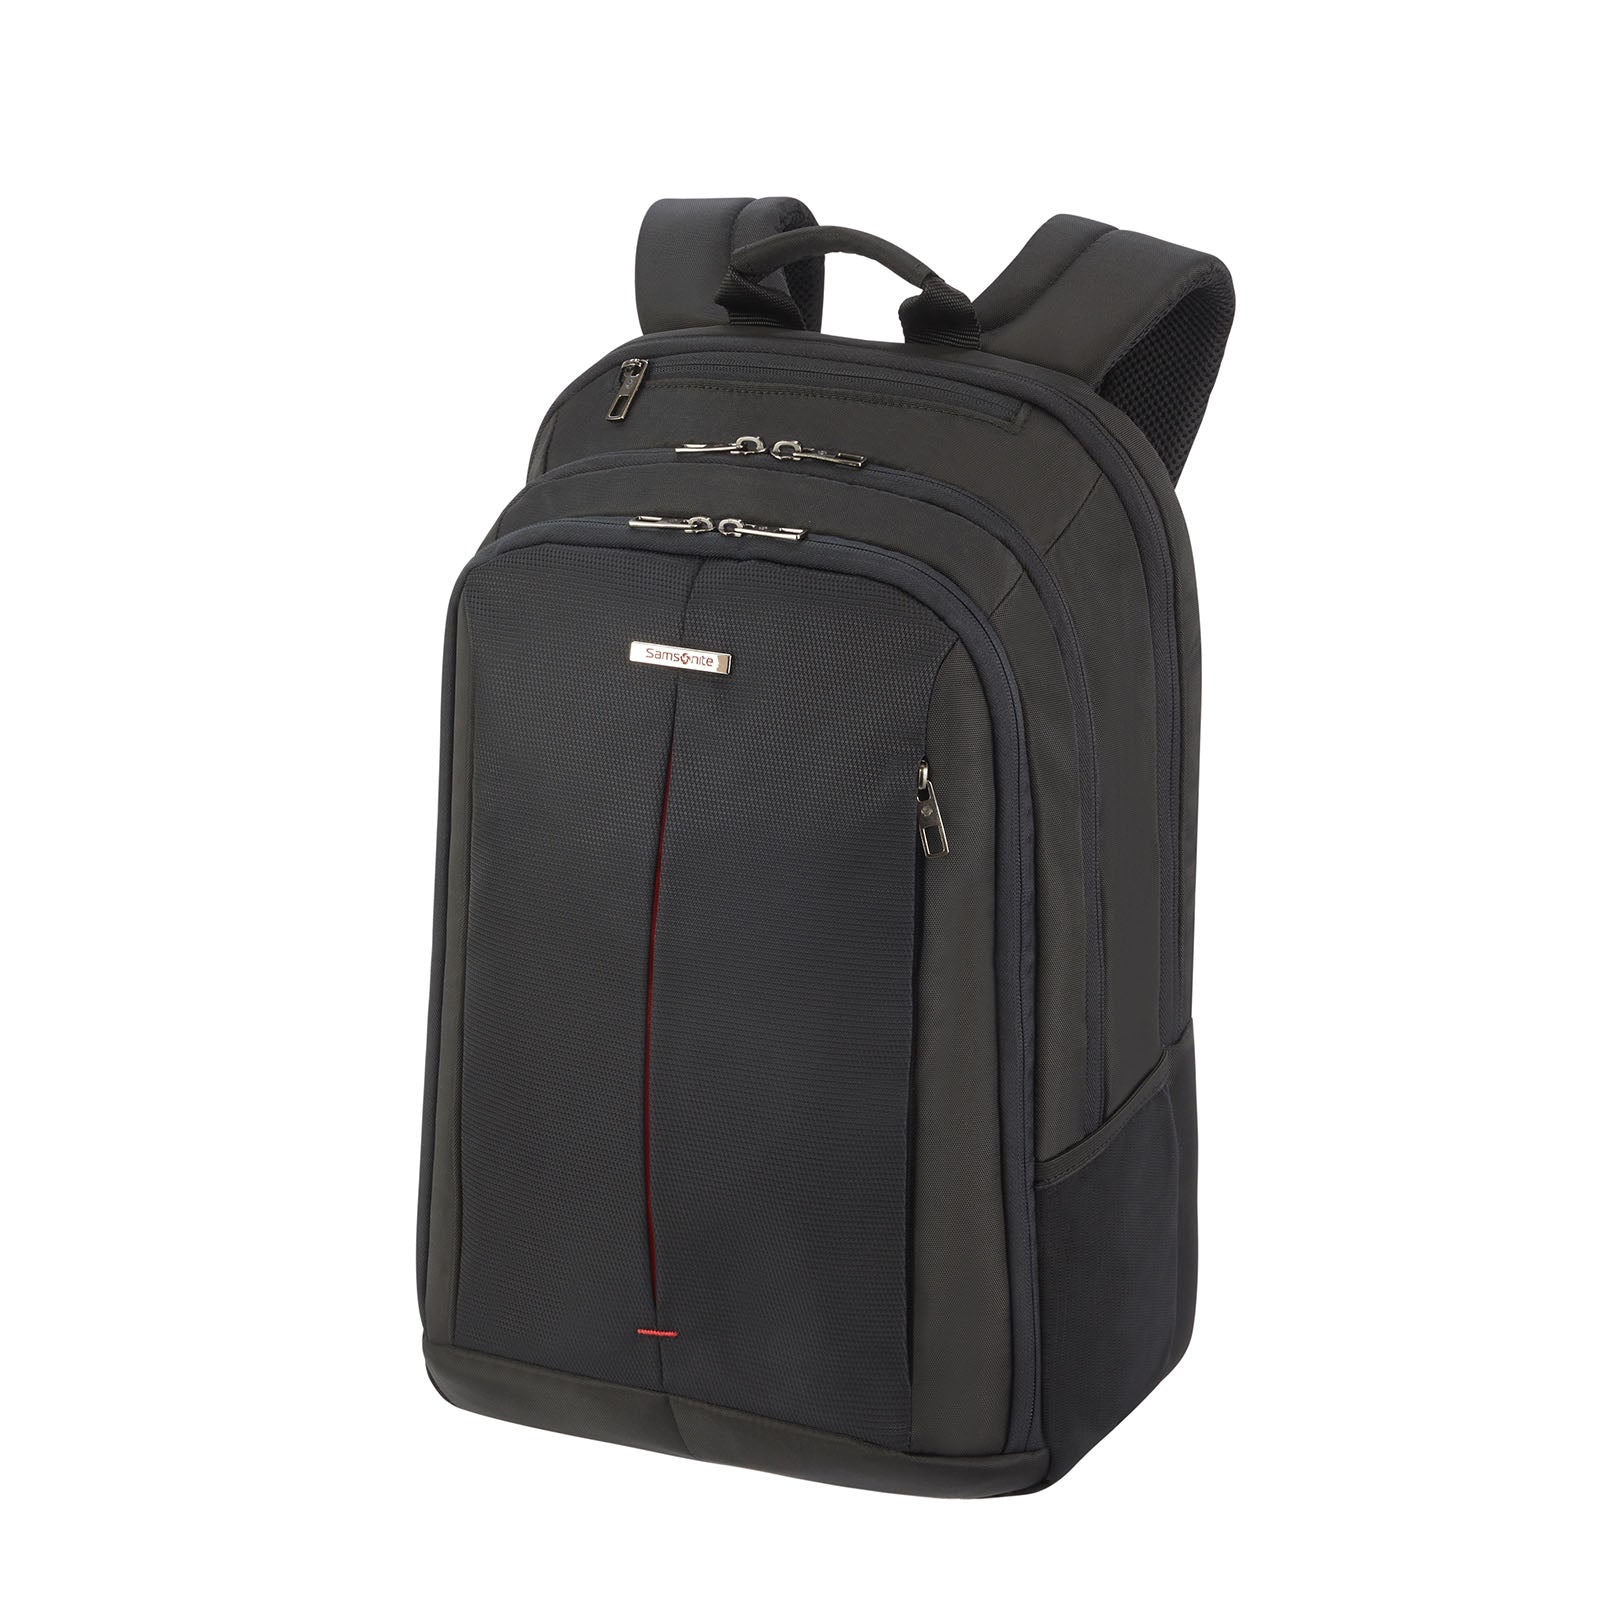 Samsonite-Guardit-2-17-Inch-Laptop-Backpack-Front-Angle